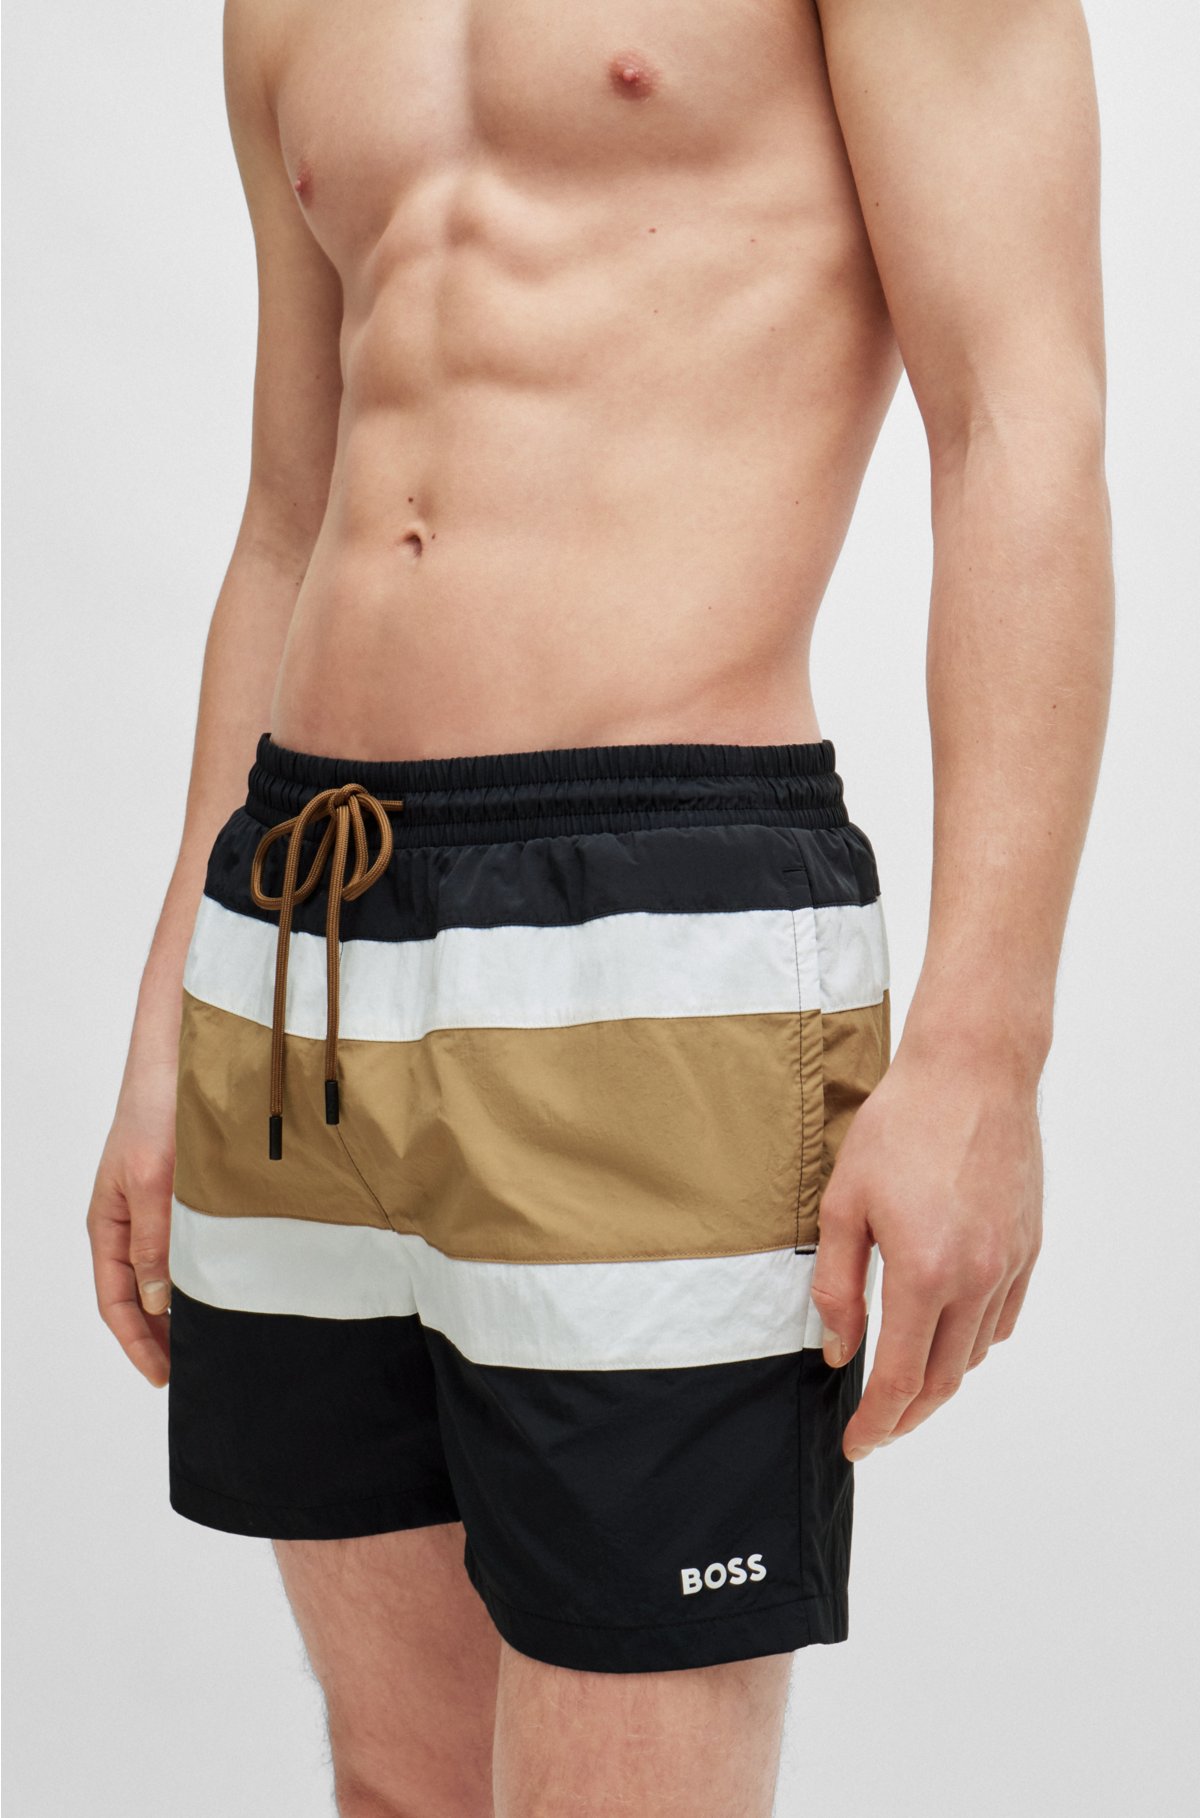 Fully lined swim shorts with colour-blocking, Black  /  White  /  Beige